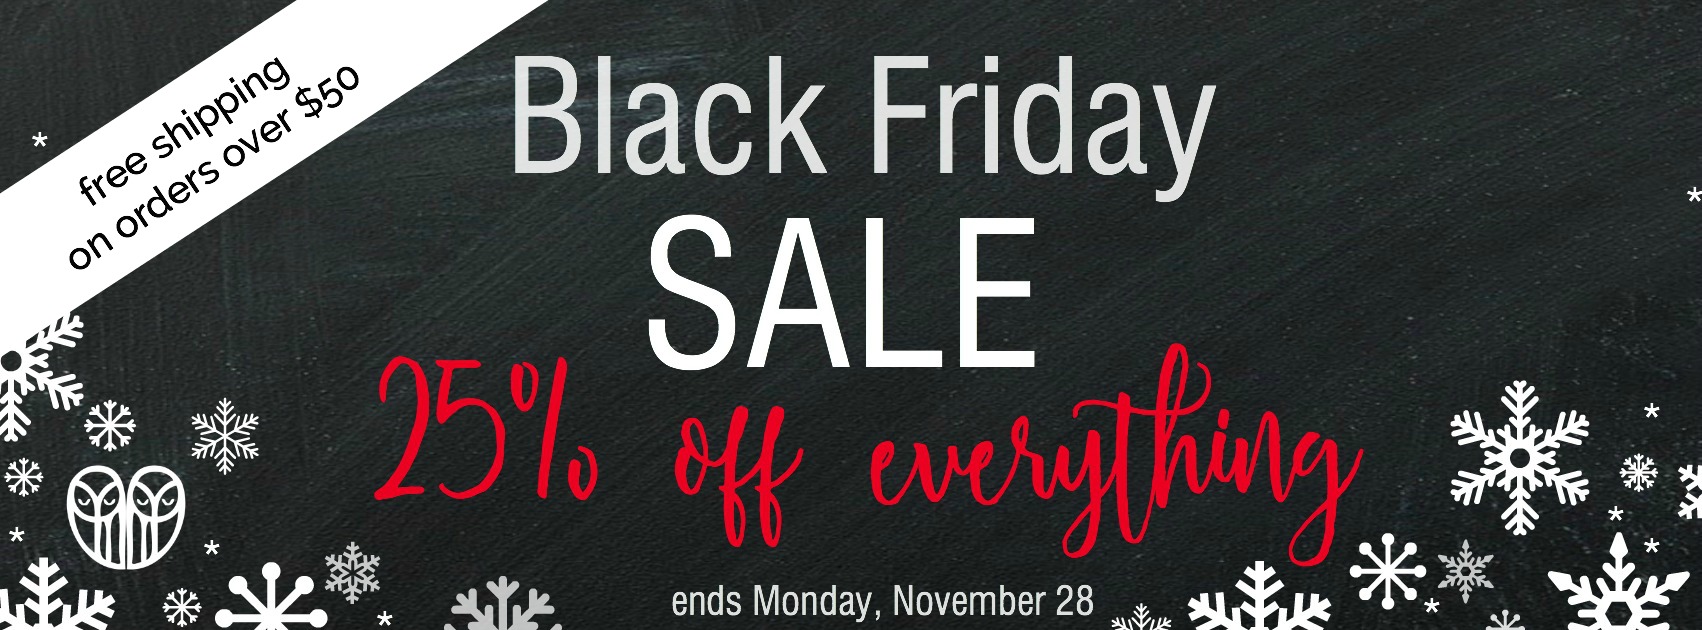 Black Friday Sale: 25% Off Everything Plus Free Shipping - www.bagsaleusa.com